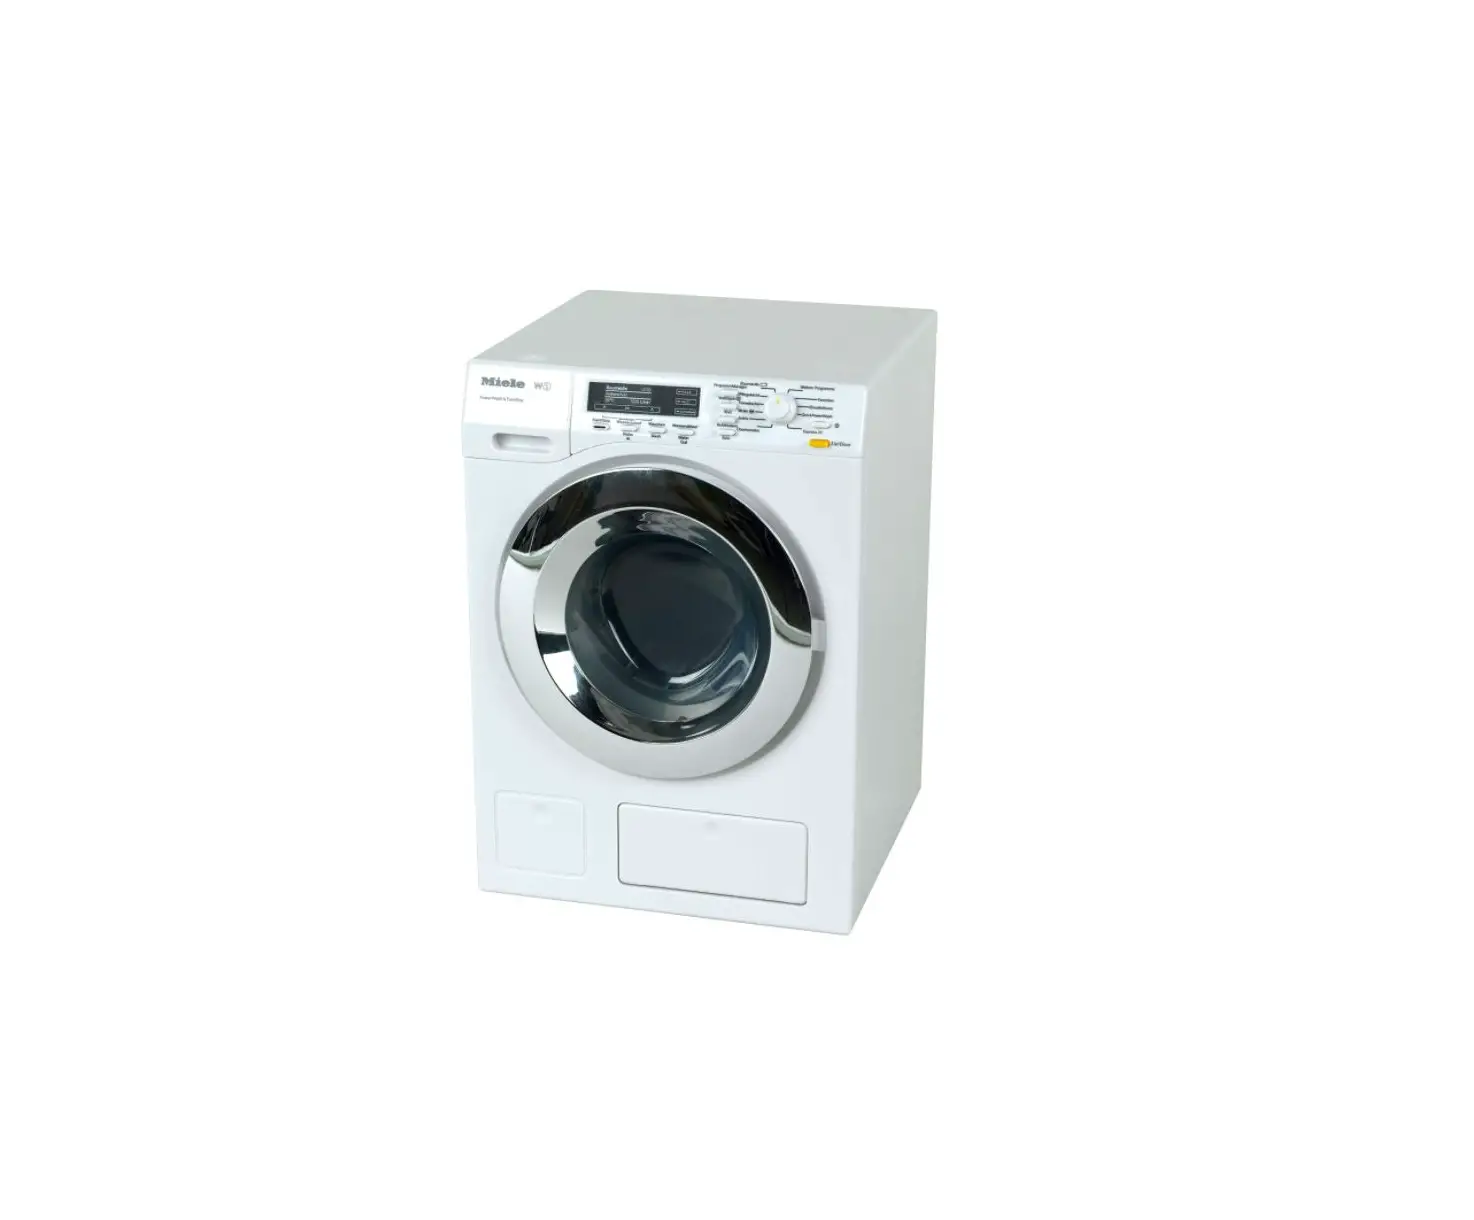 Miele Washing machine User Manual